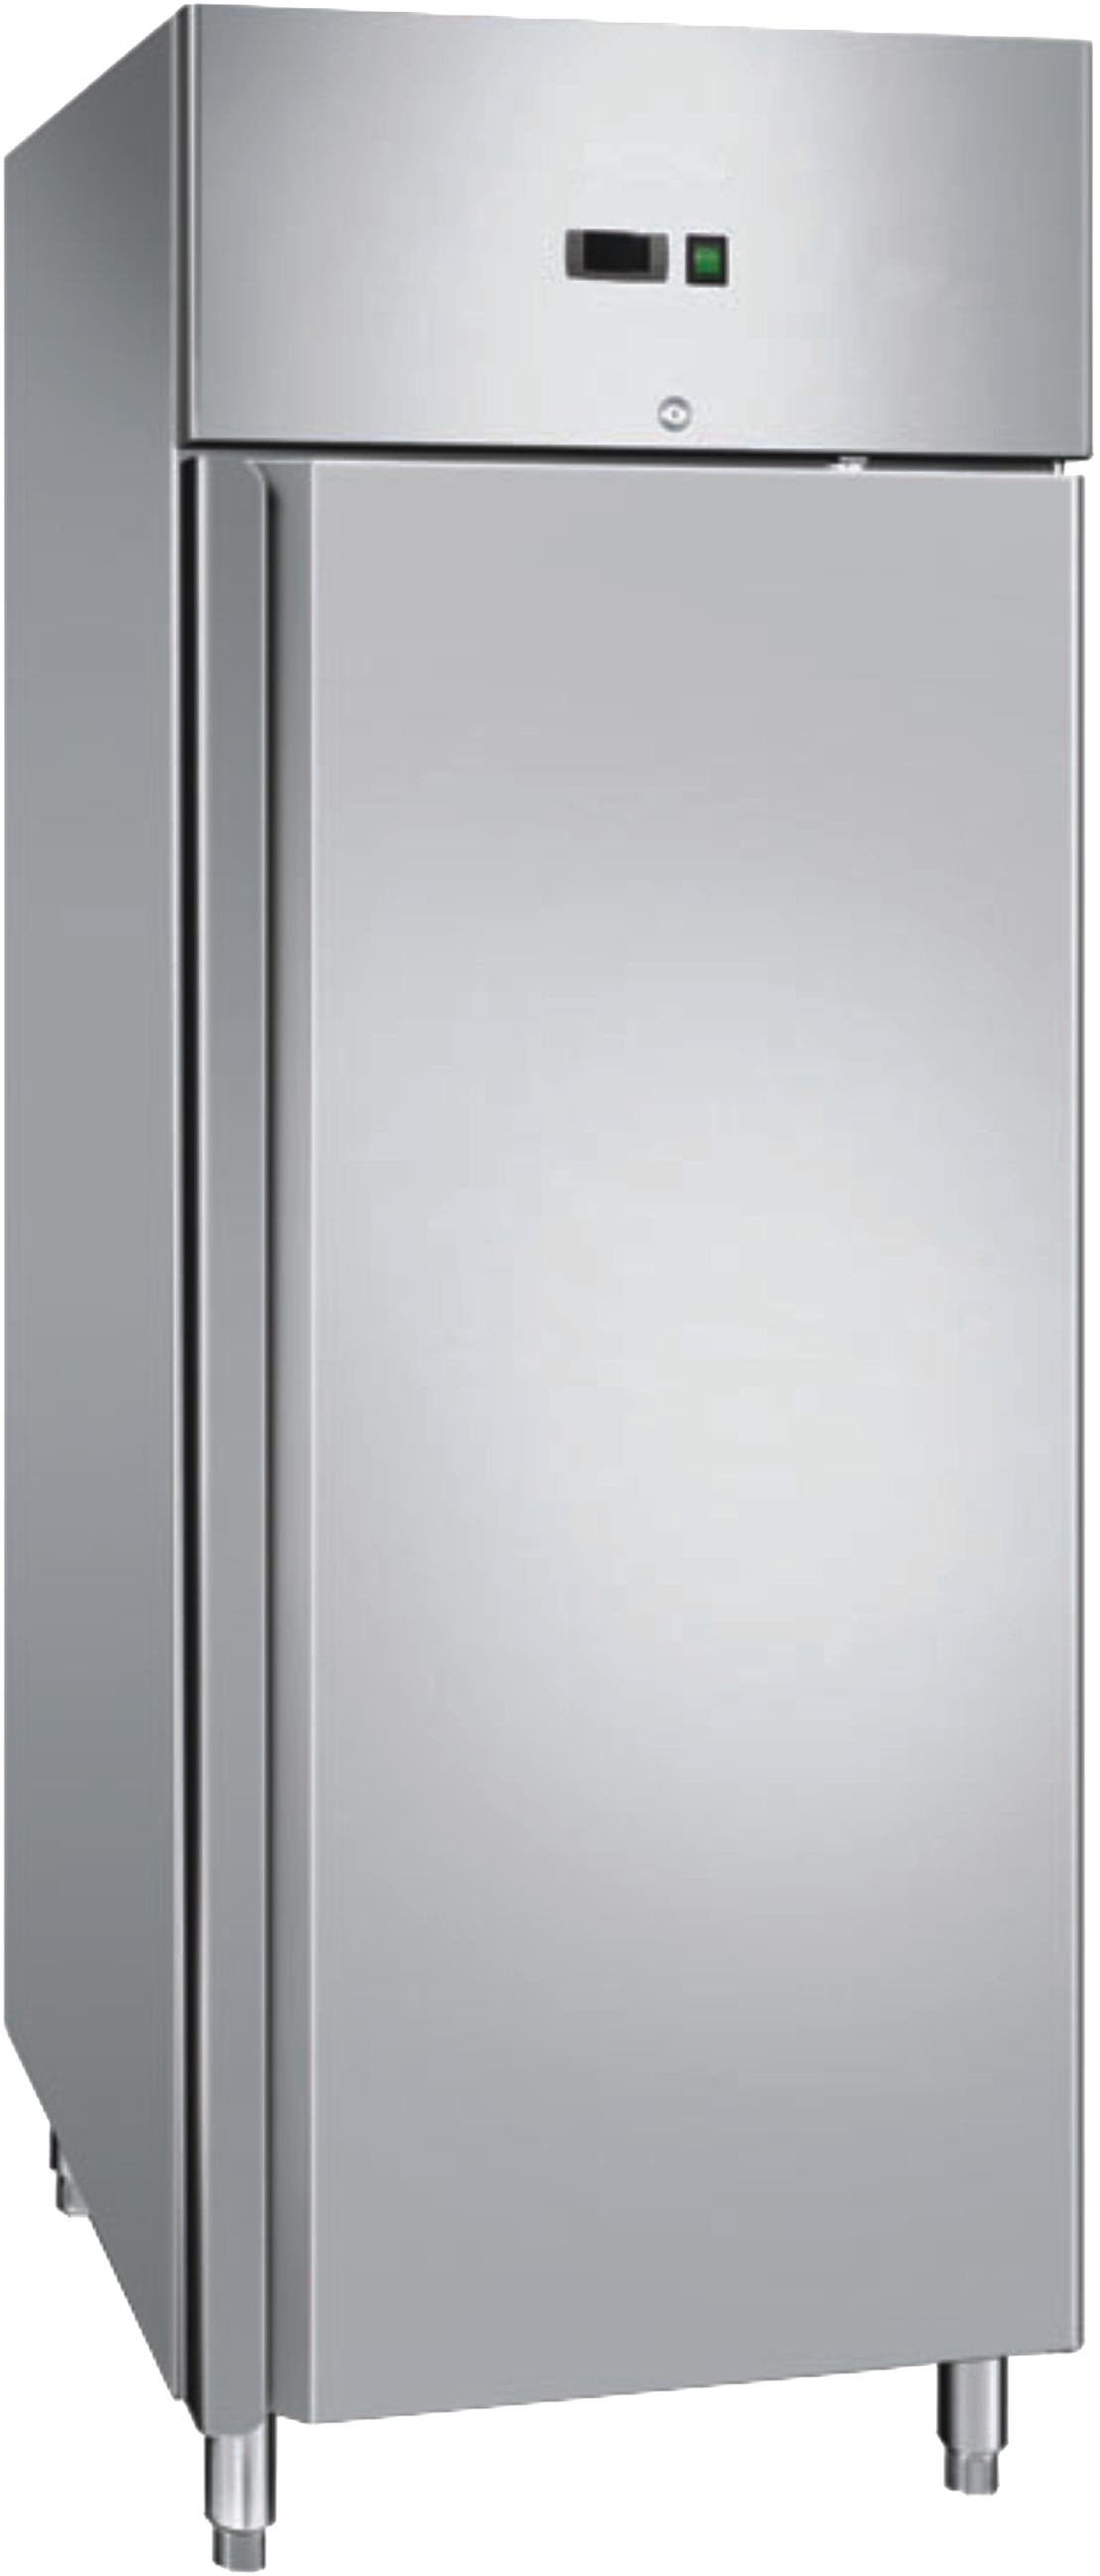 Armoire frigorifique ar 650 st_0